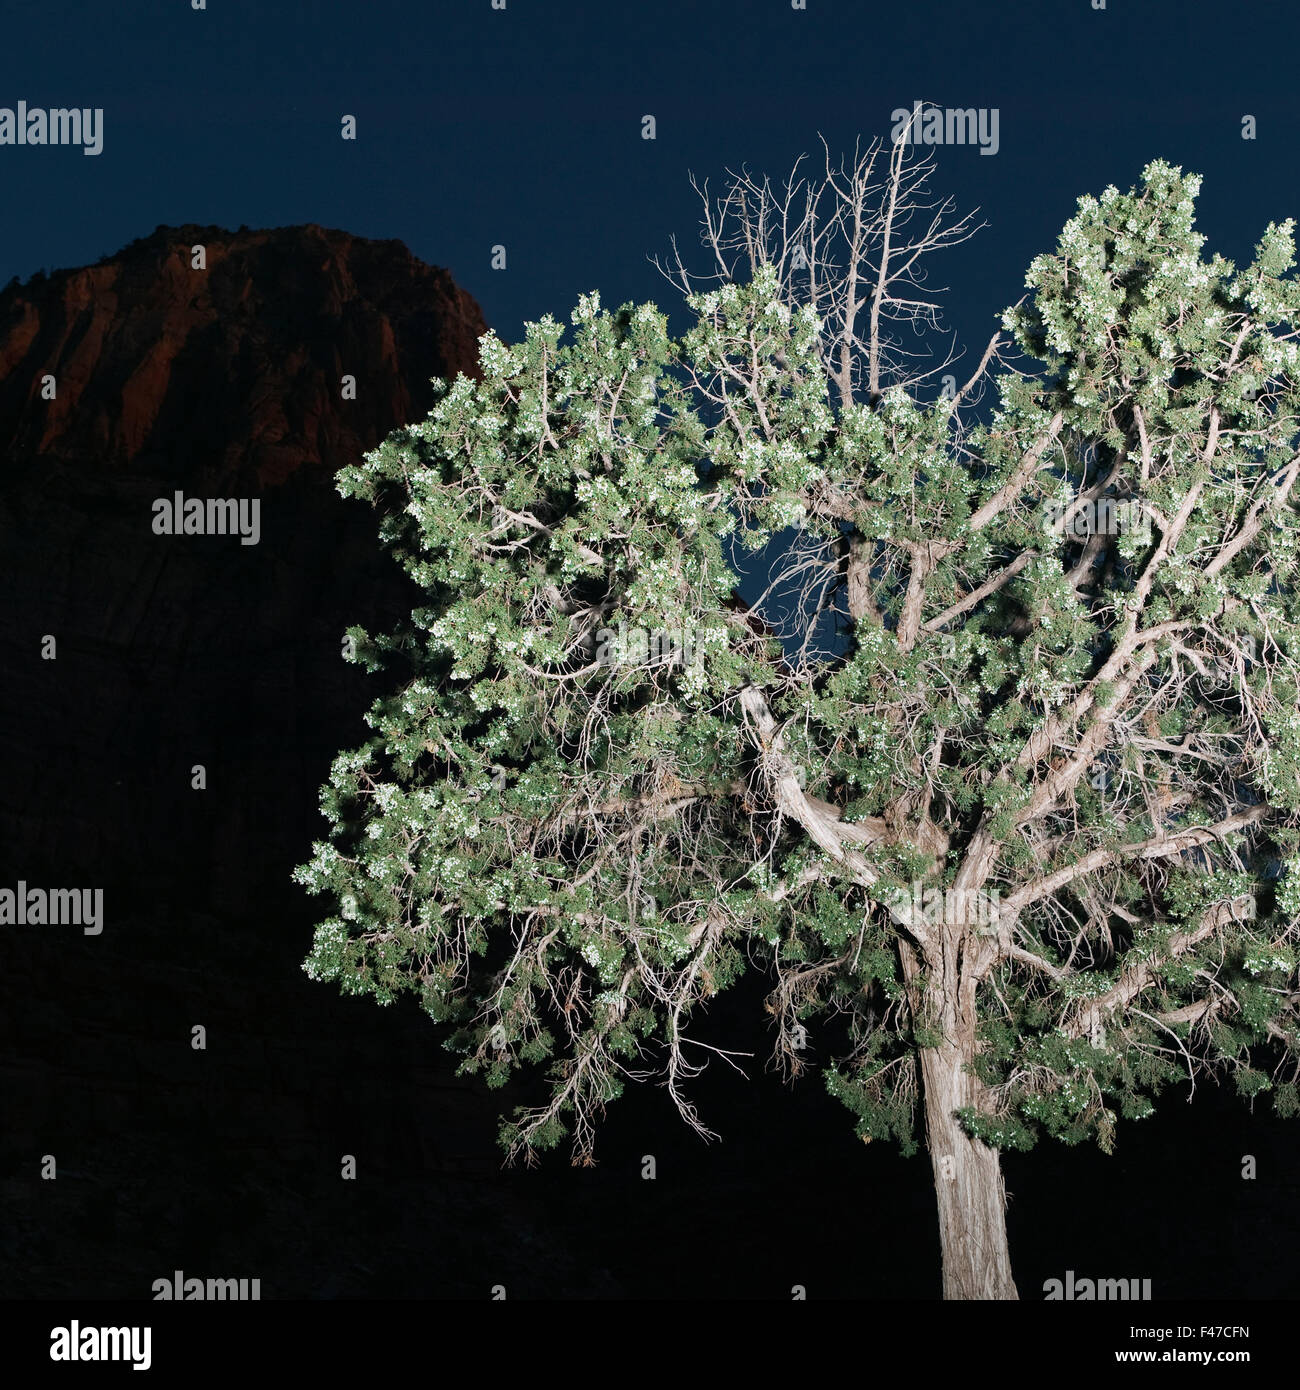 Amerika blau California Farbe Bild Kontrast Dunkel Effekt Abend Abend Himmel grünes Licht Effekt Mountain Nationalpark Stockfoto